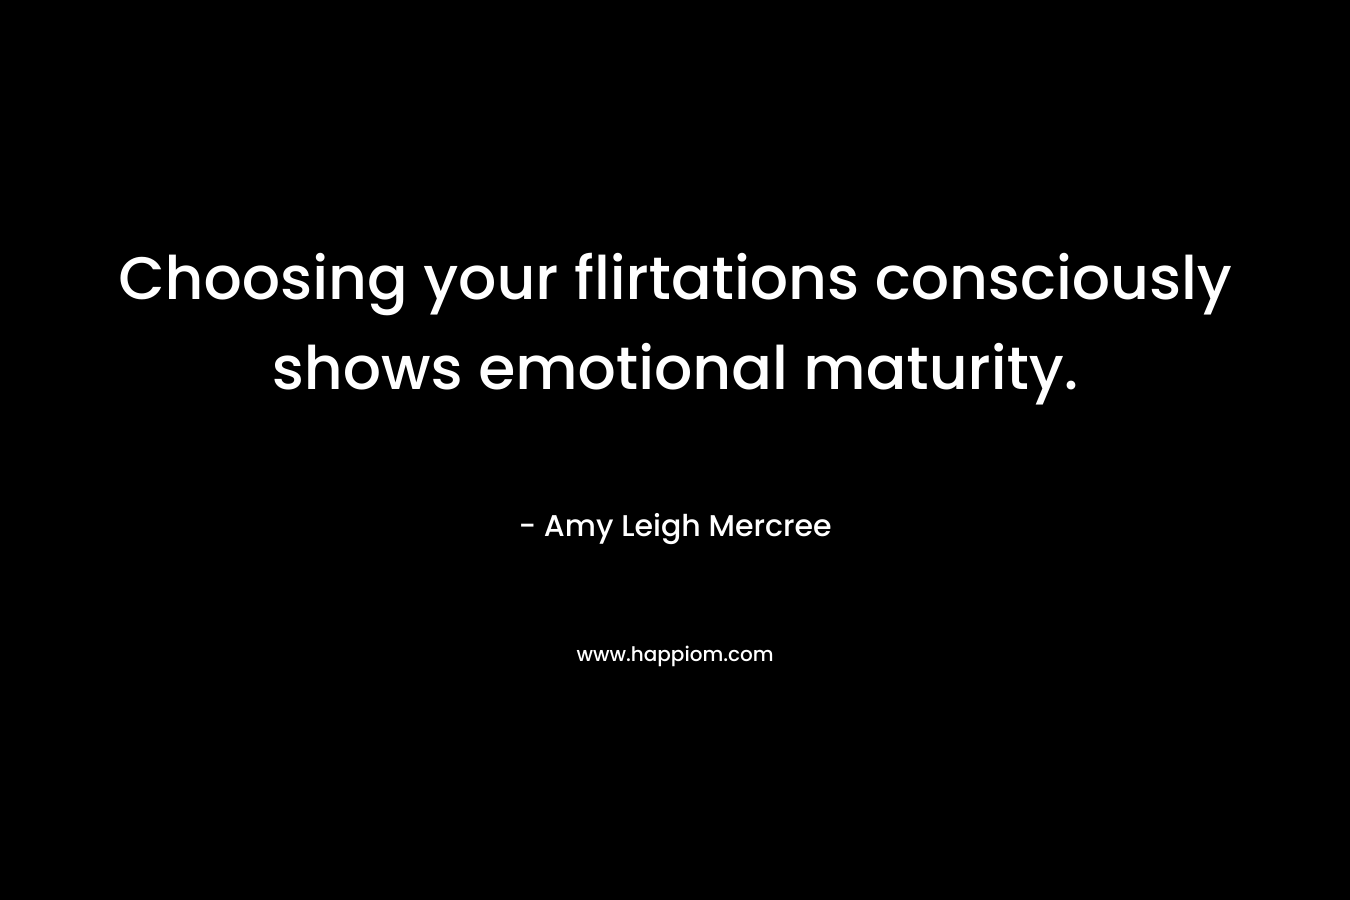 Choosing your flirtations consciously shows emotional maturity.